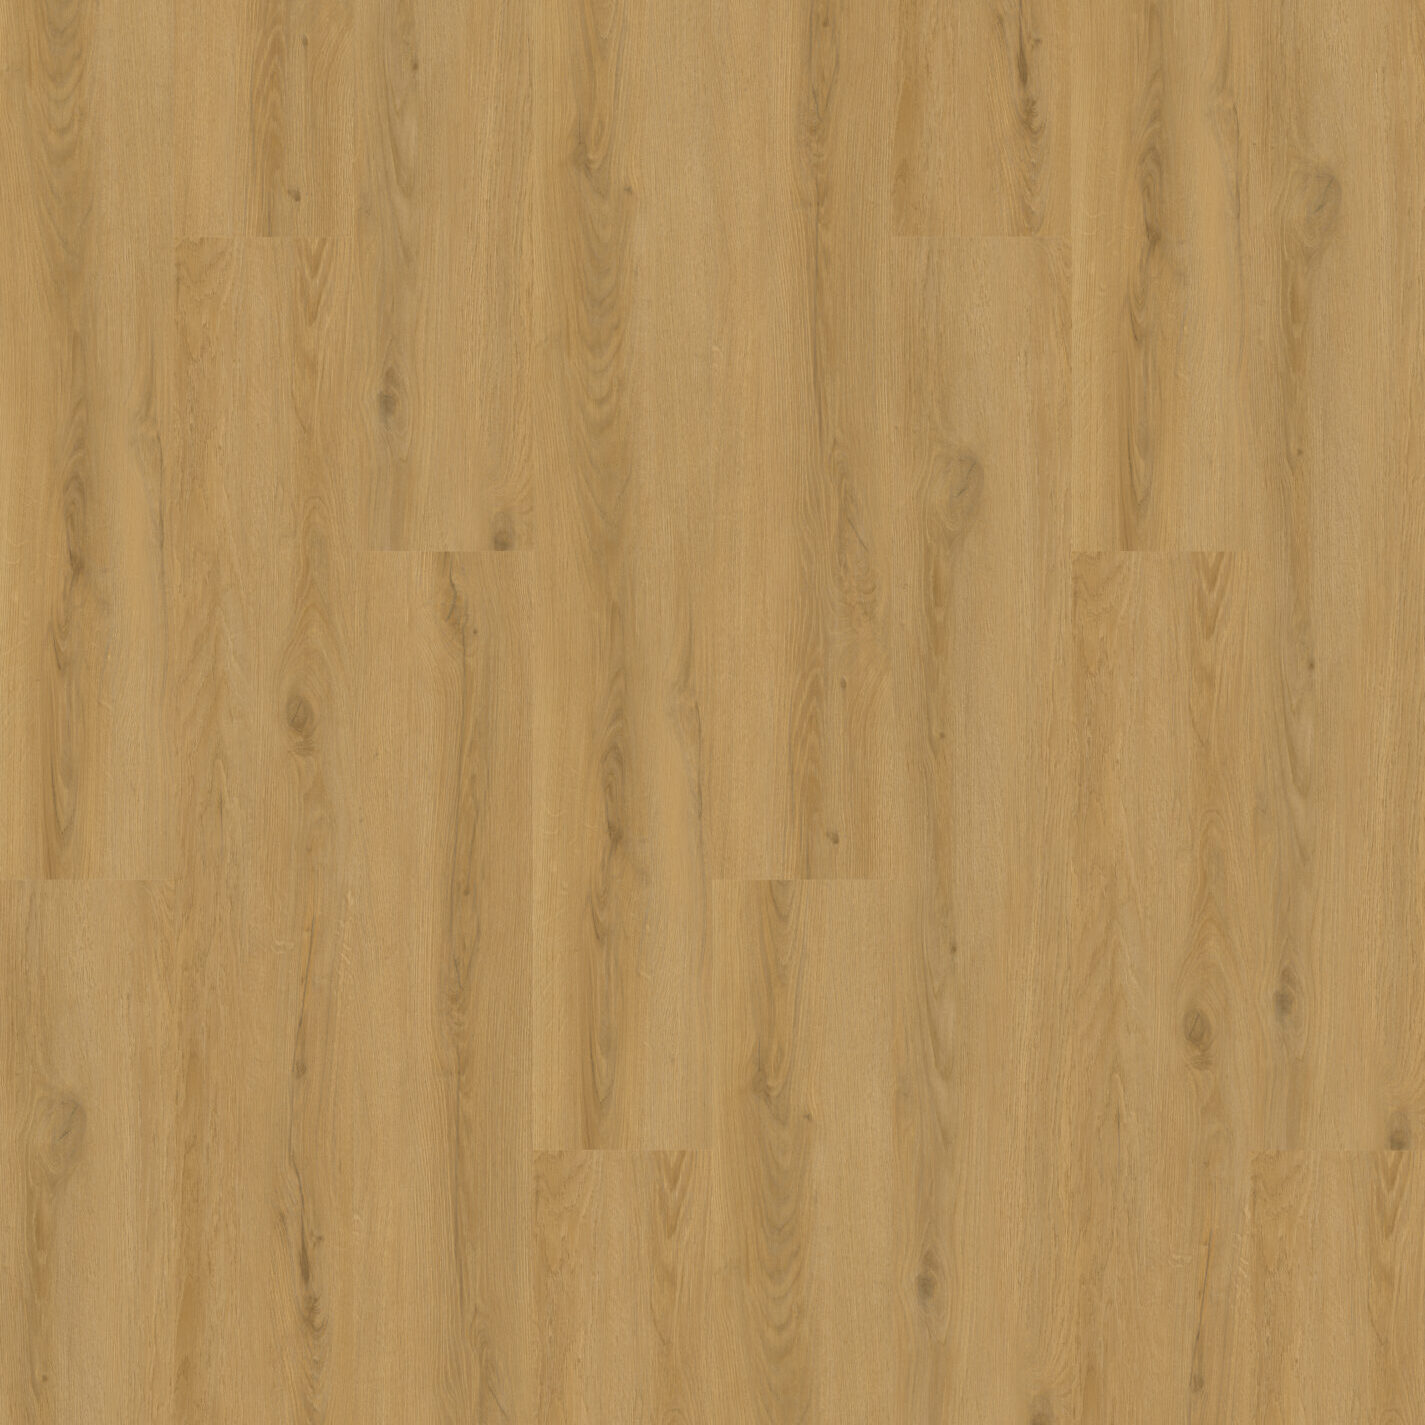 A brown Woodland flooring